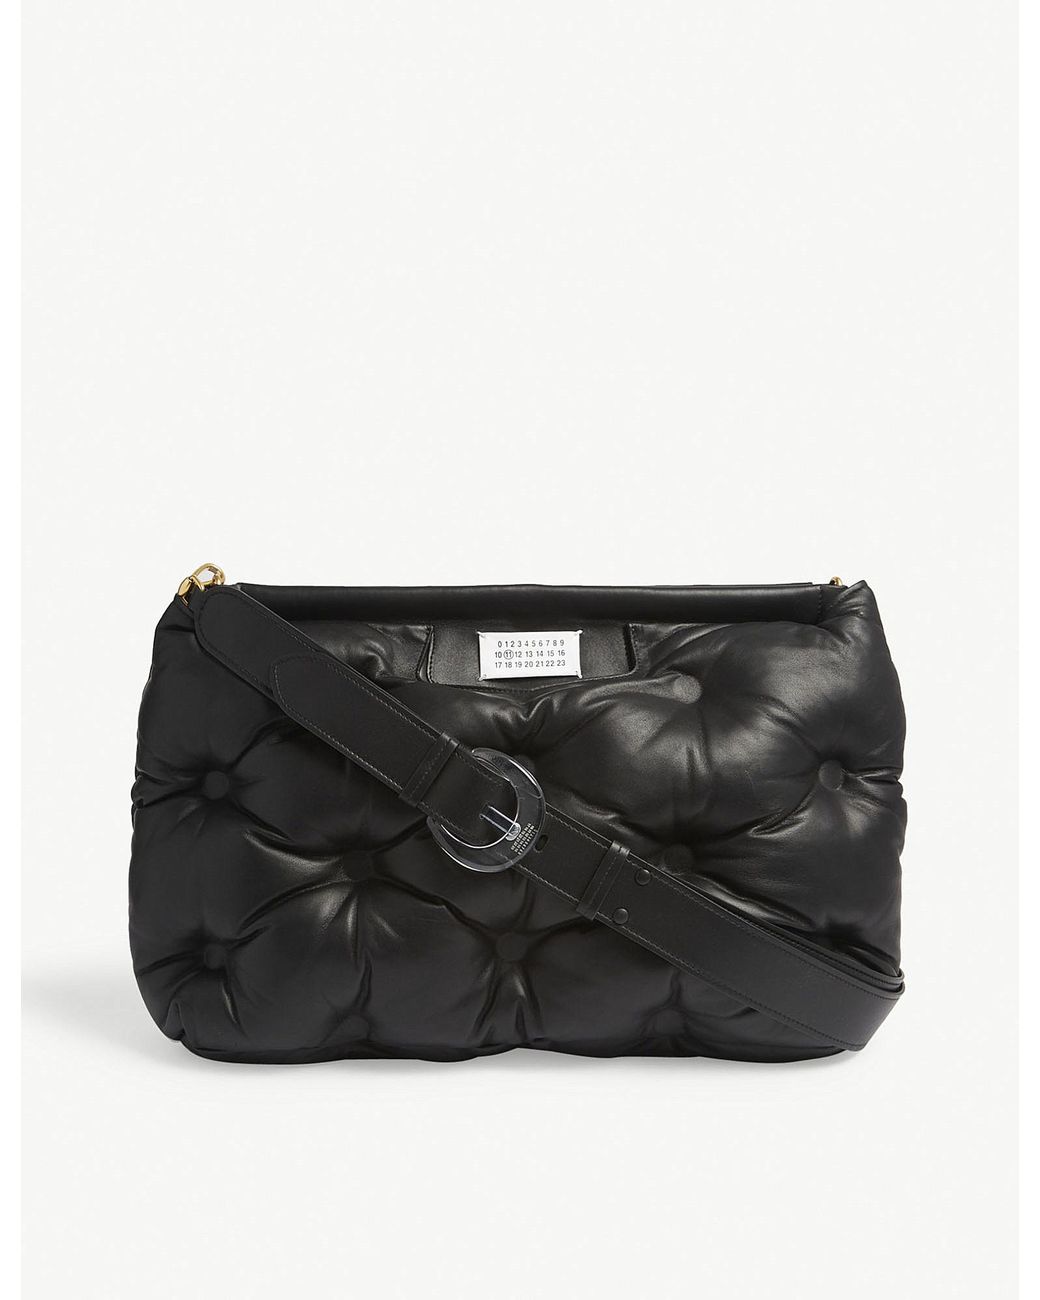 Maison Margiela Pillow Glam Slam Large Leather Bag in Black | Lyst